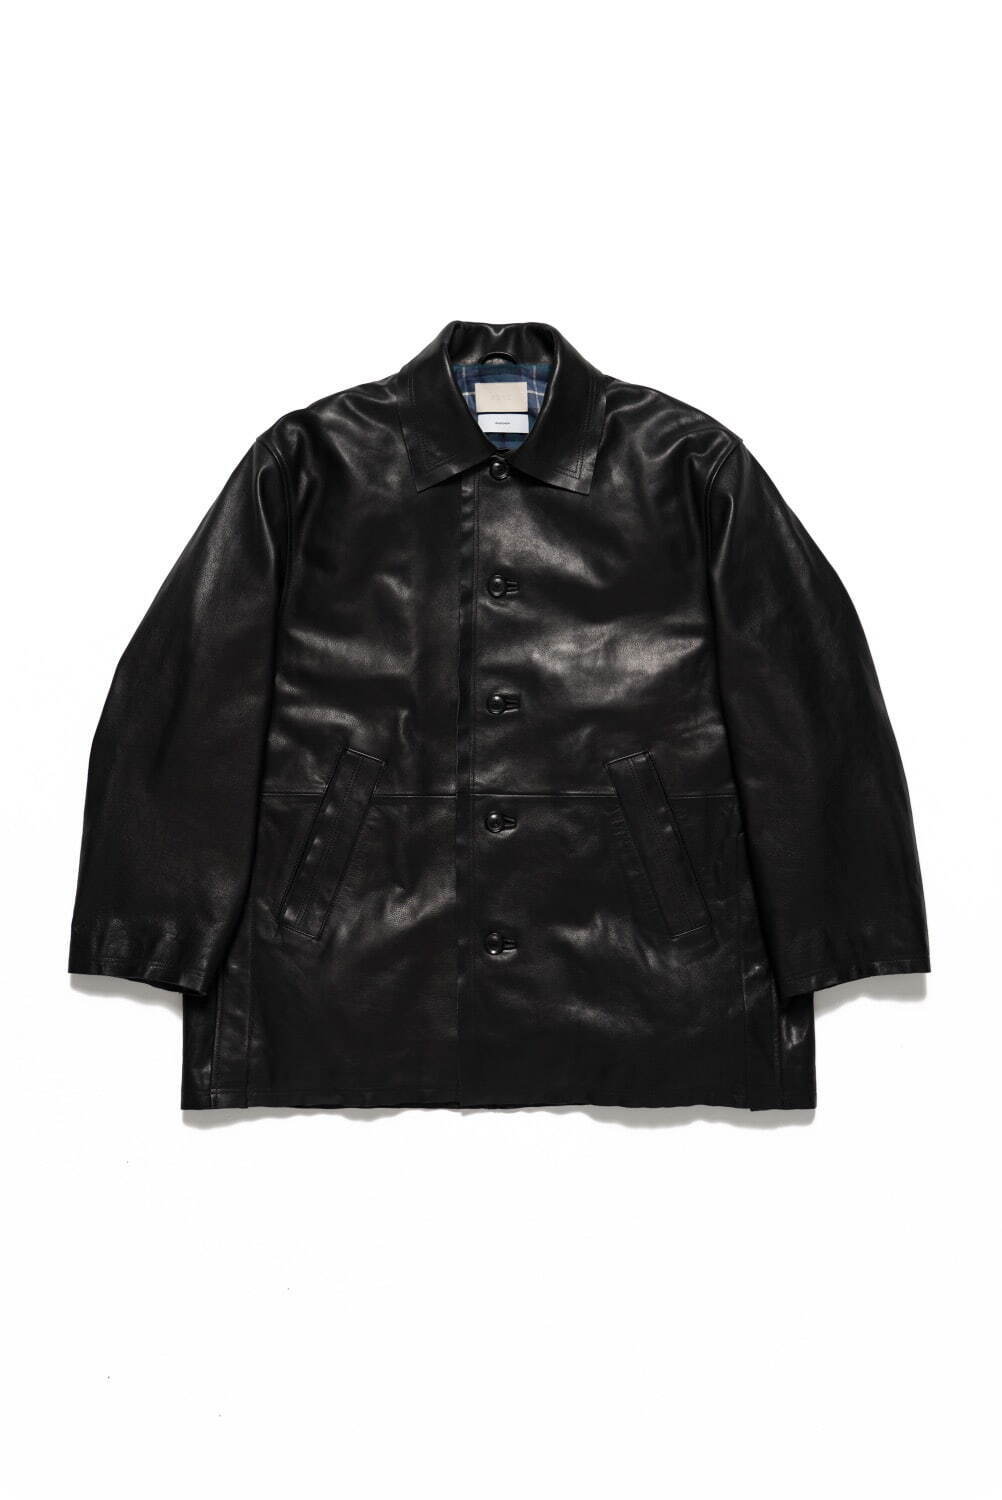 YOKE for Graphpaper Leather Car Coat 143,000円